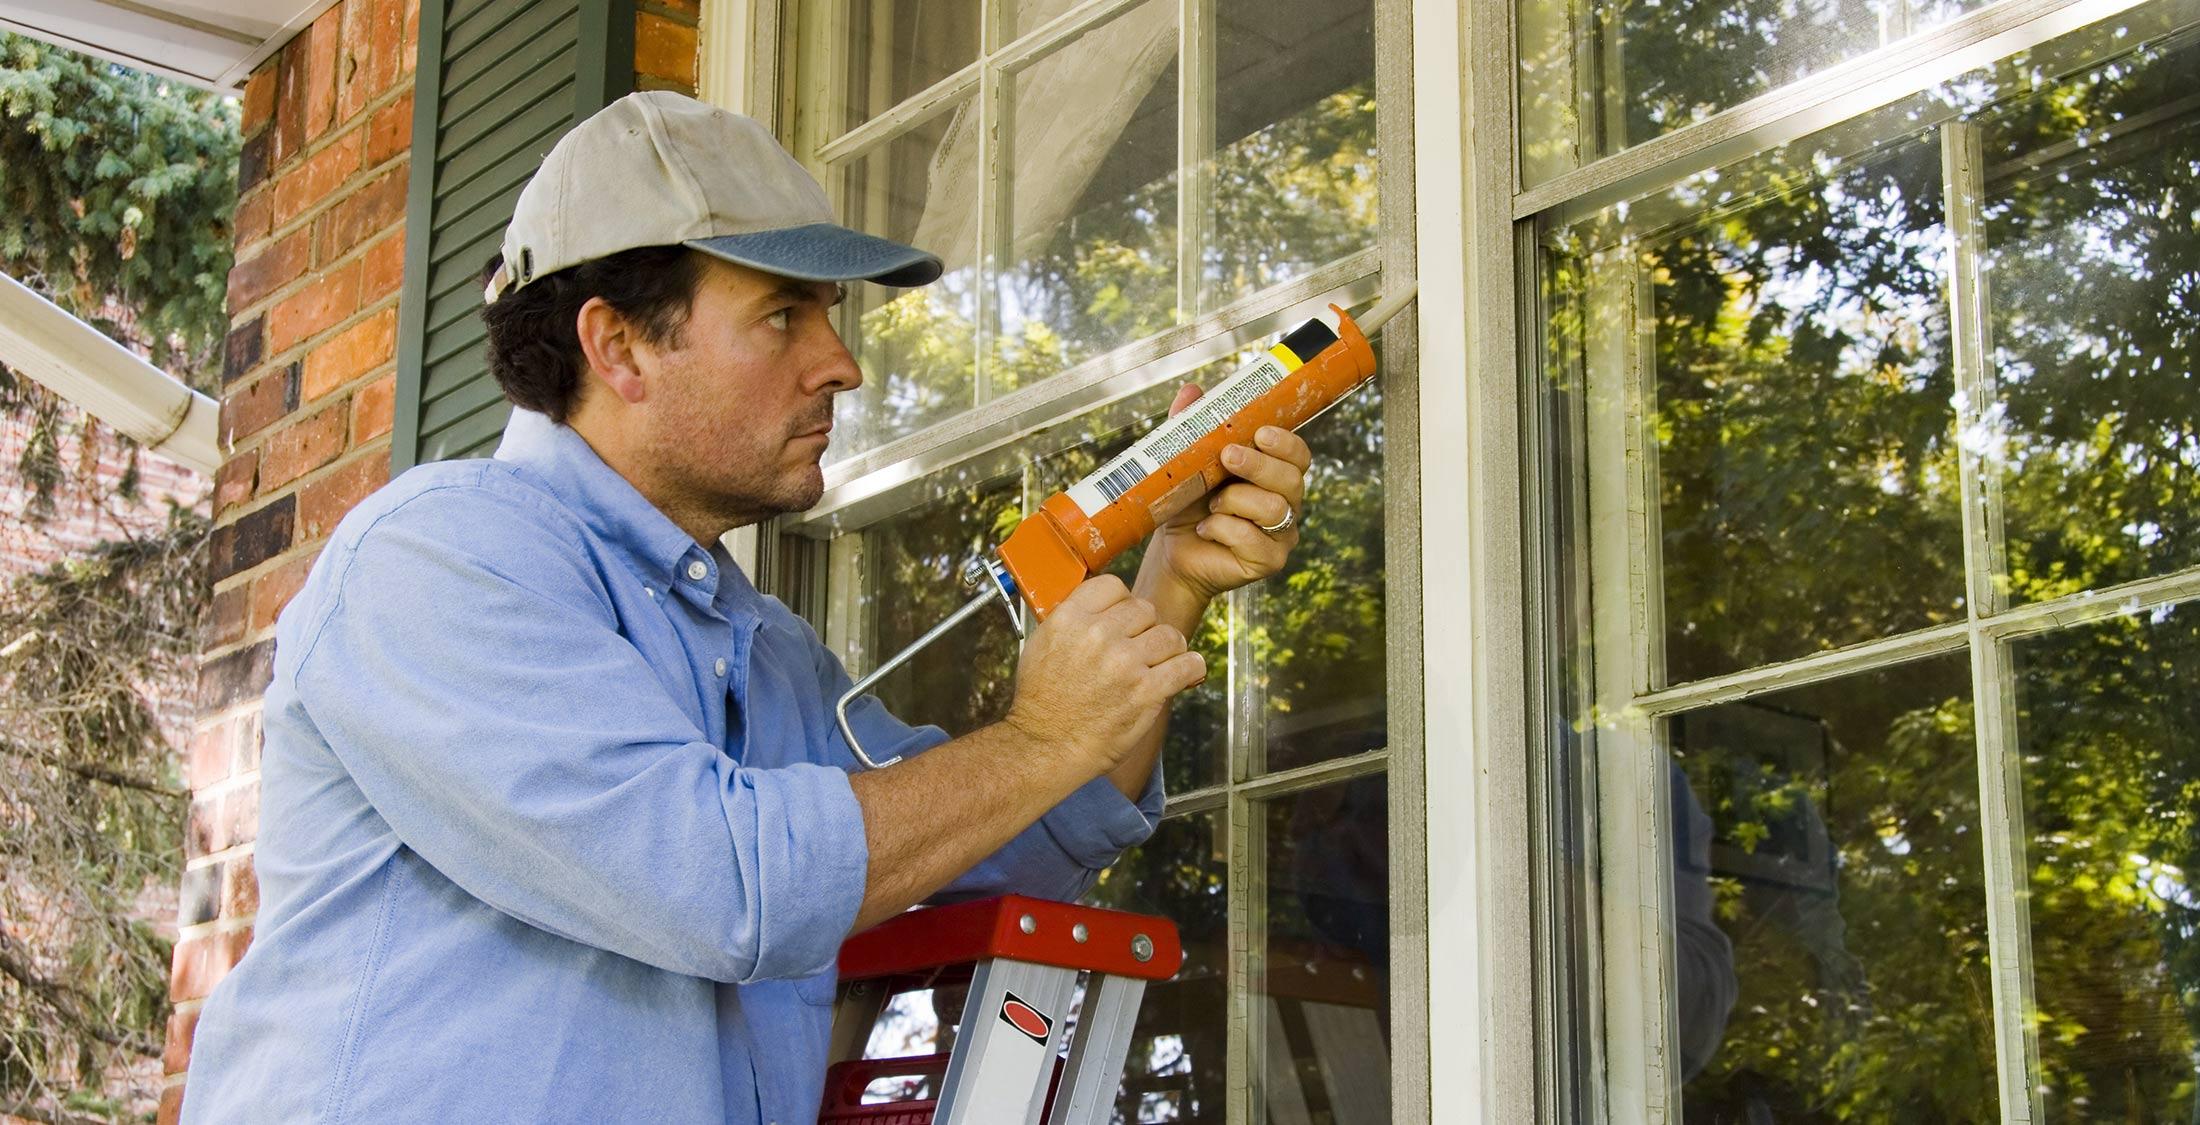 man fixing window